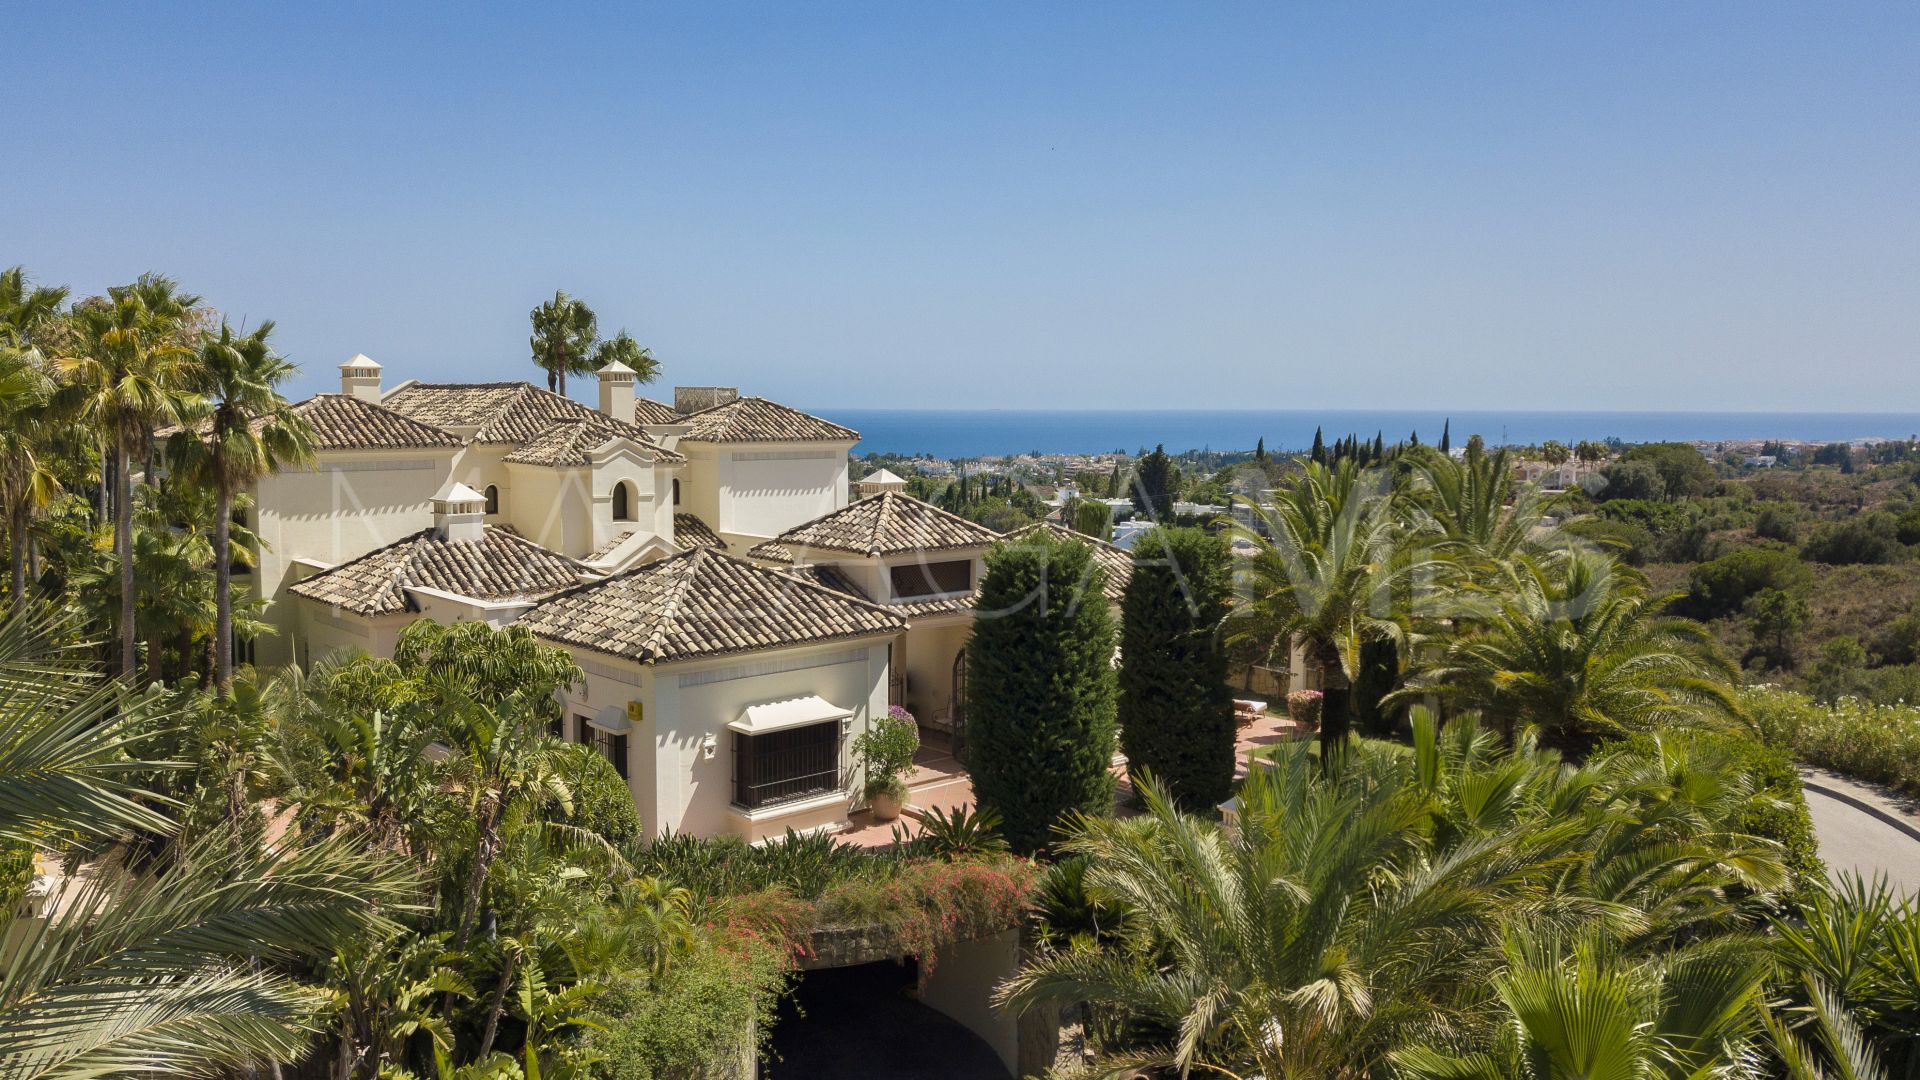 4 bedrooms villa in Marbella Hill Club for sale